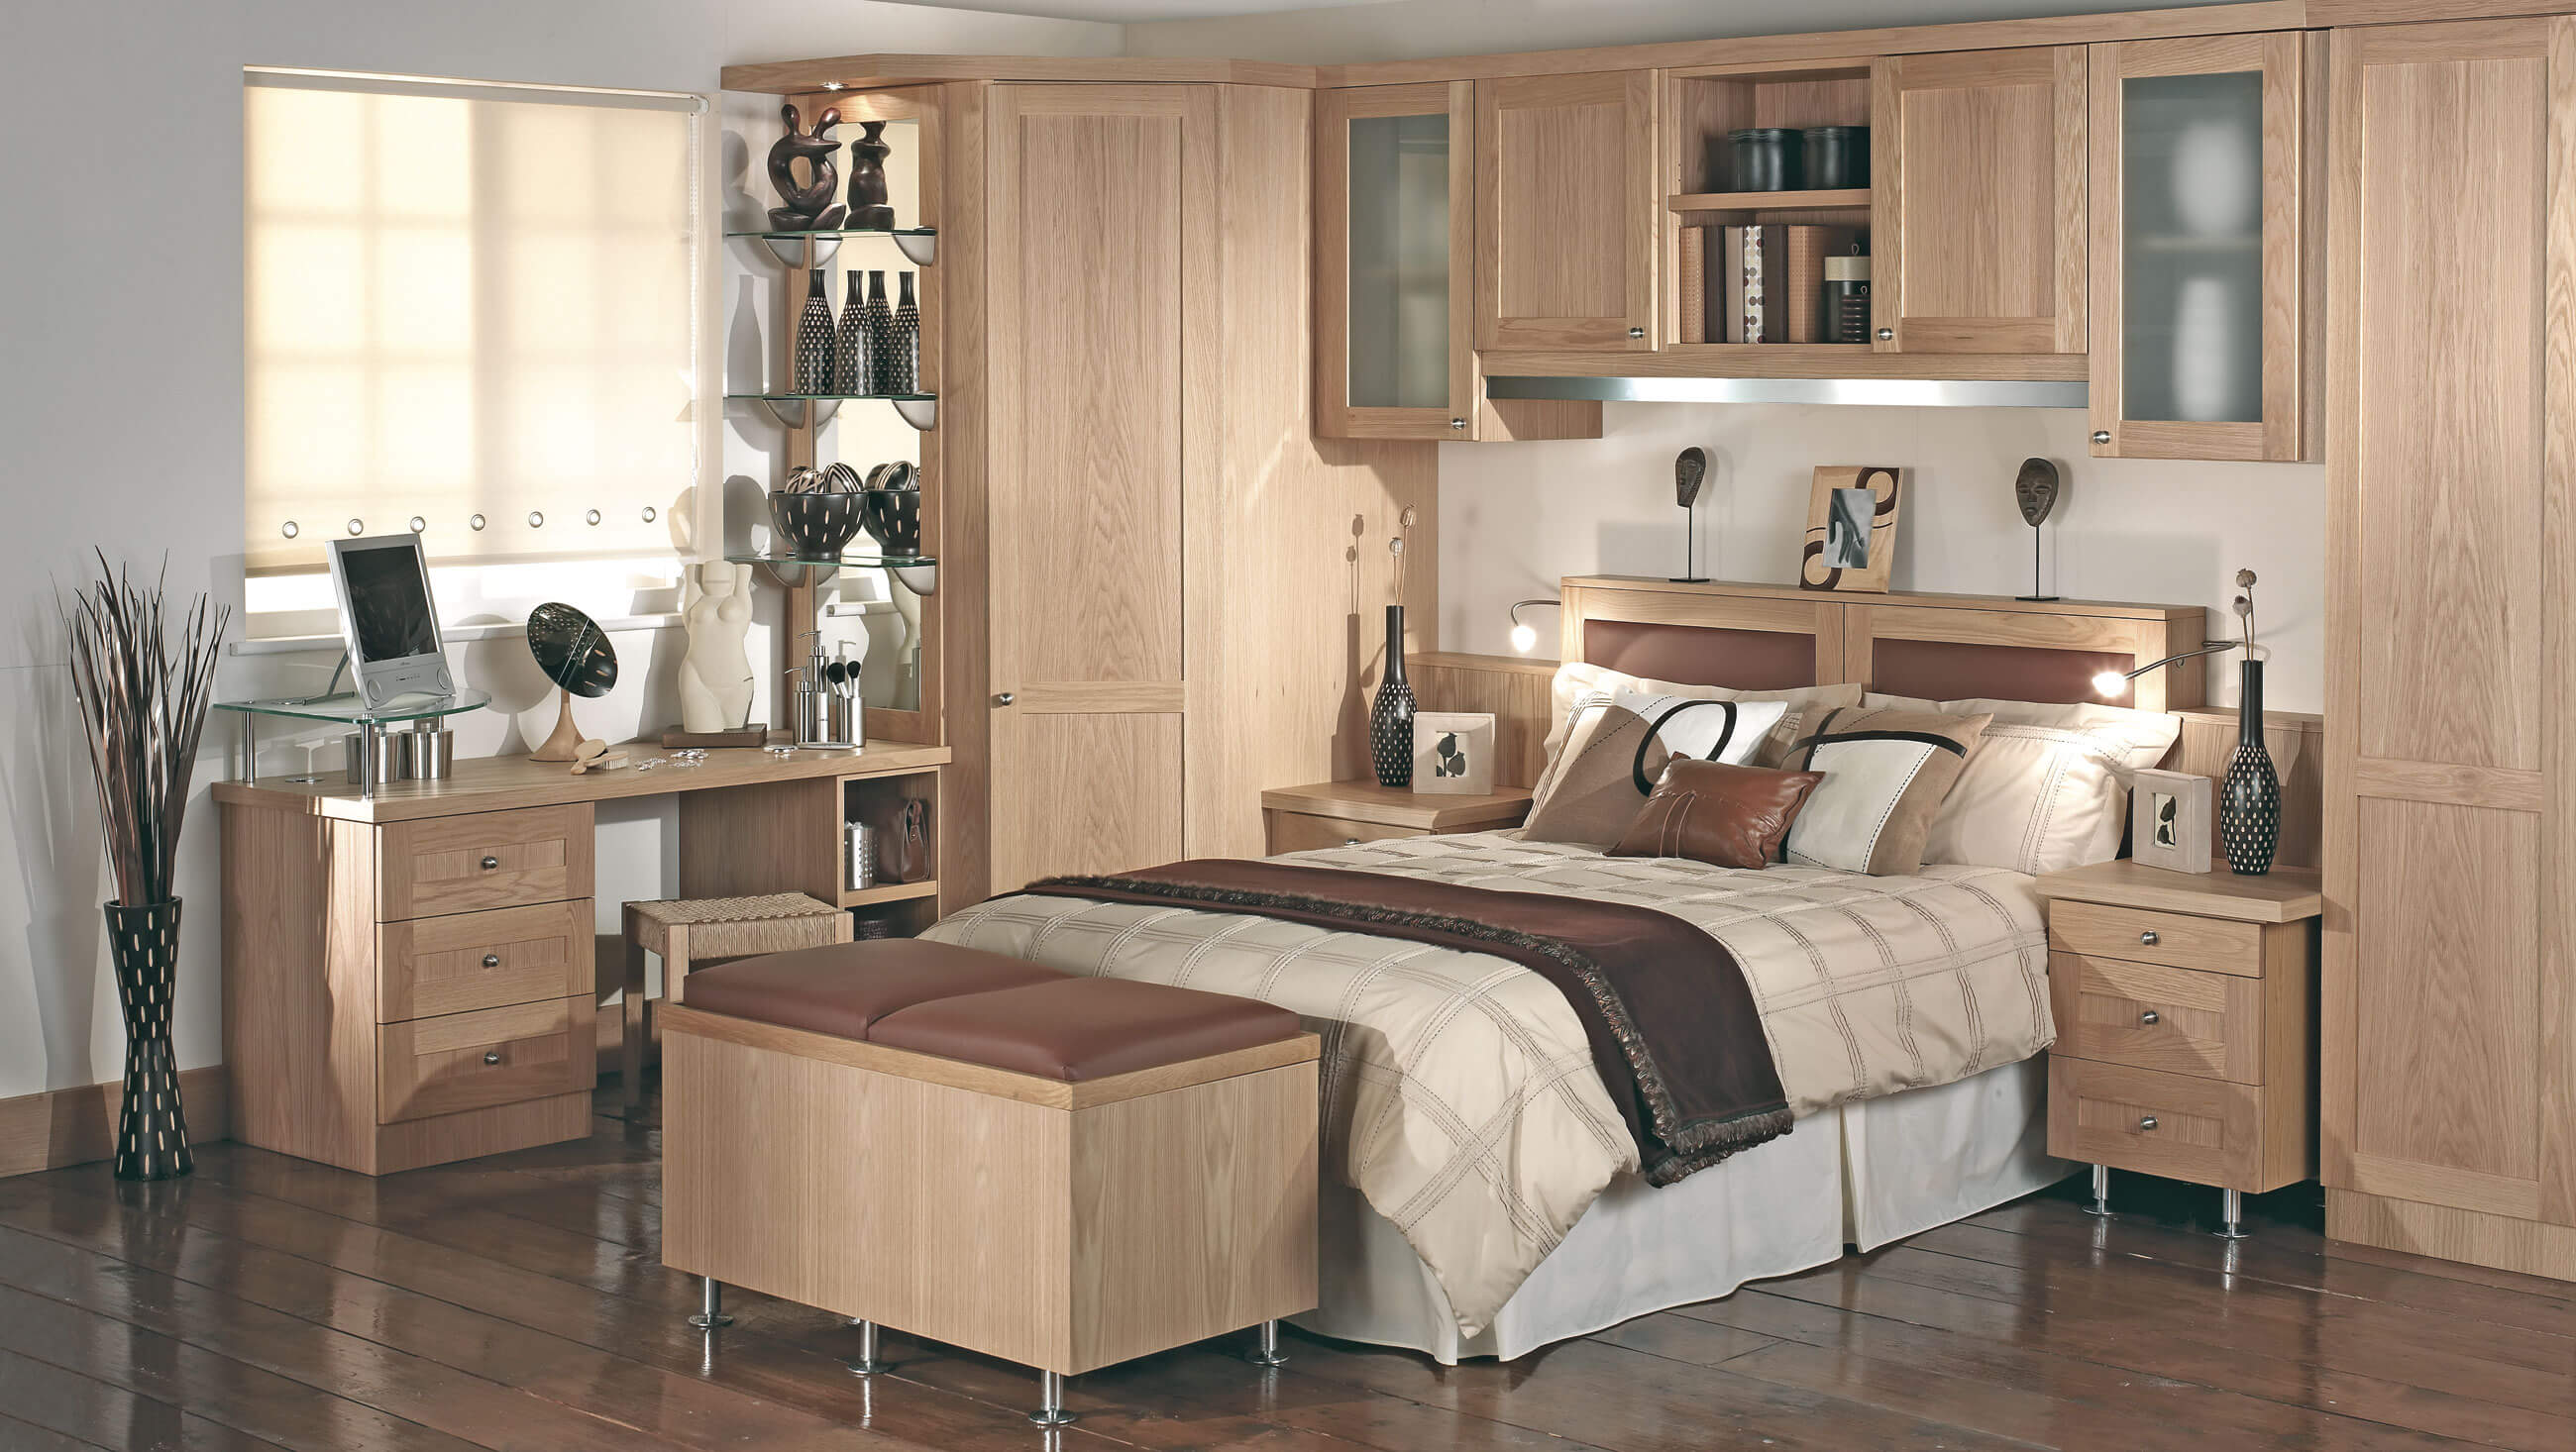 neville johnson bedroom furniture